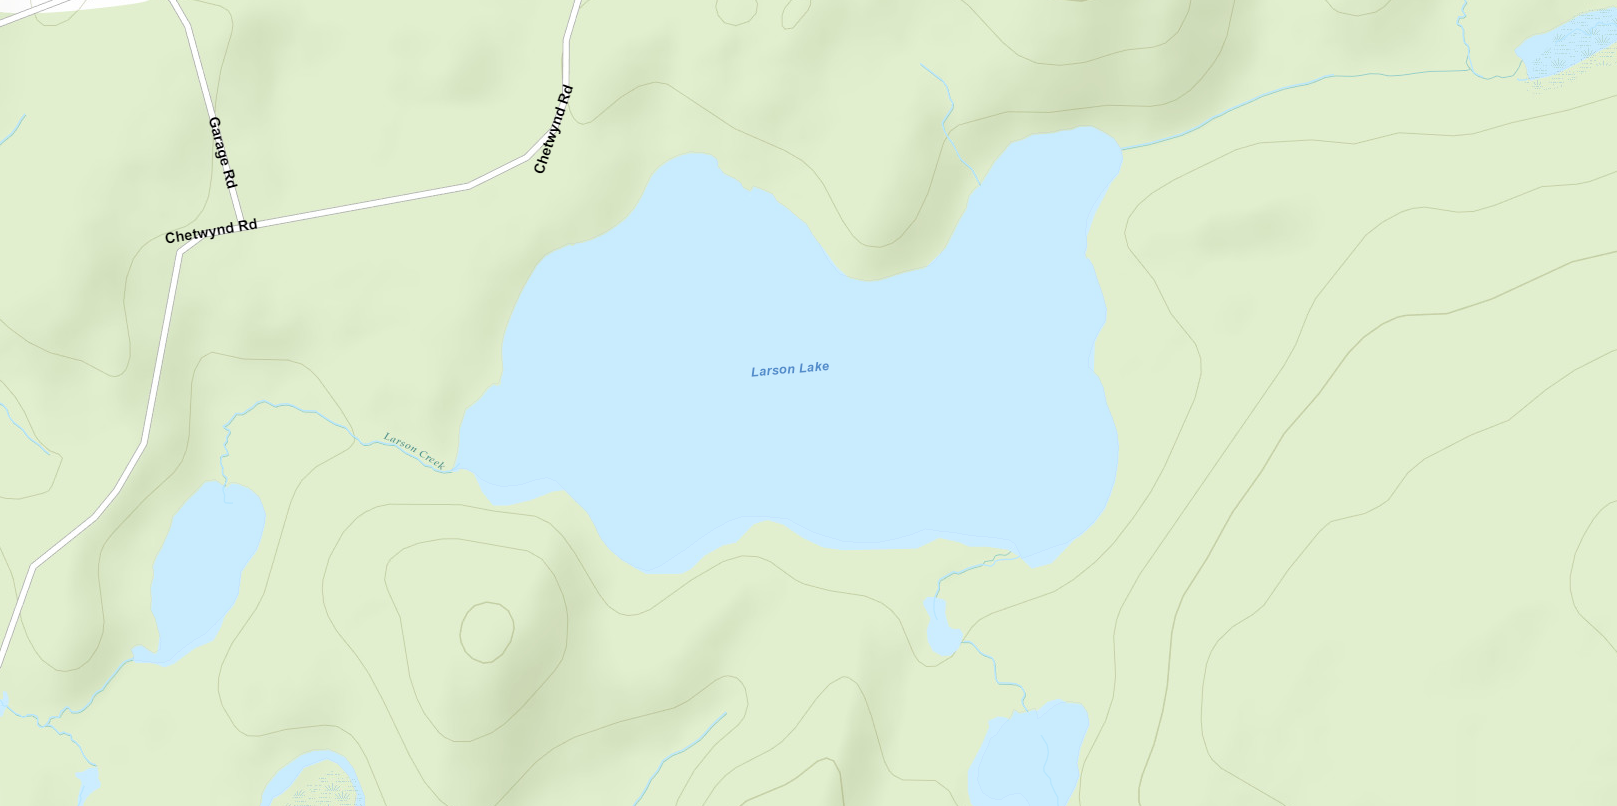 Larson Lake Cadastral Map - Larson Lake - Muskoka